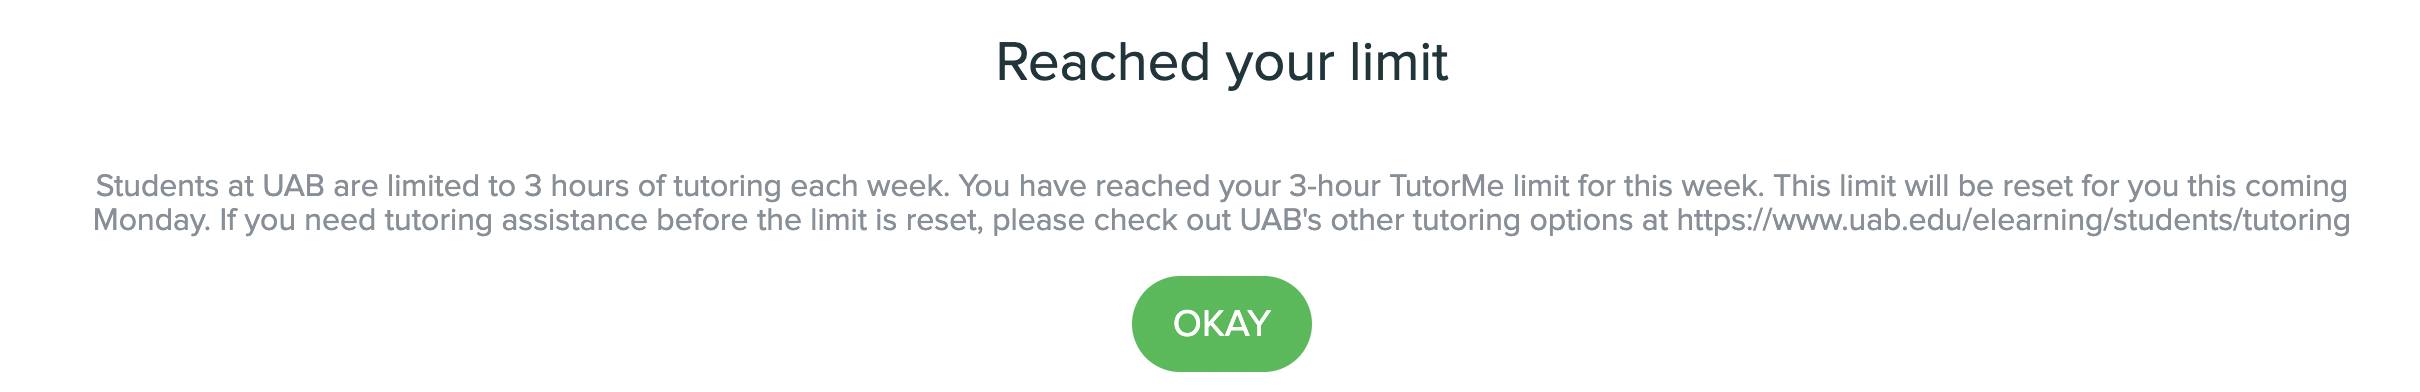 screenshot of 3 hour limit message